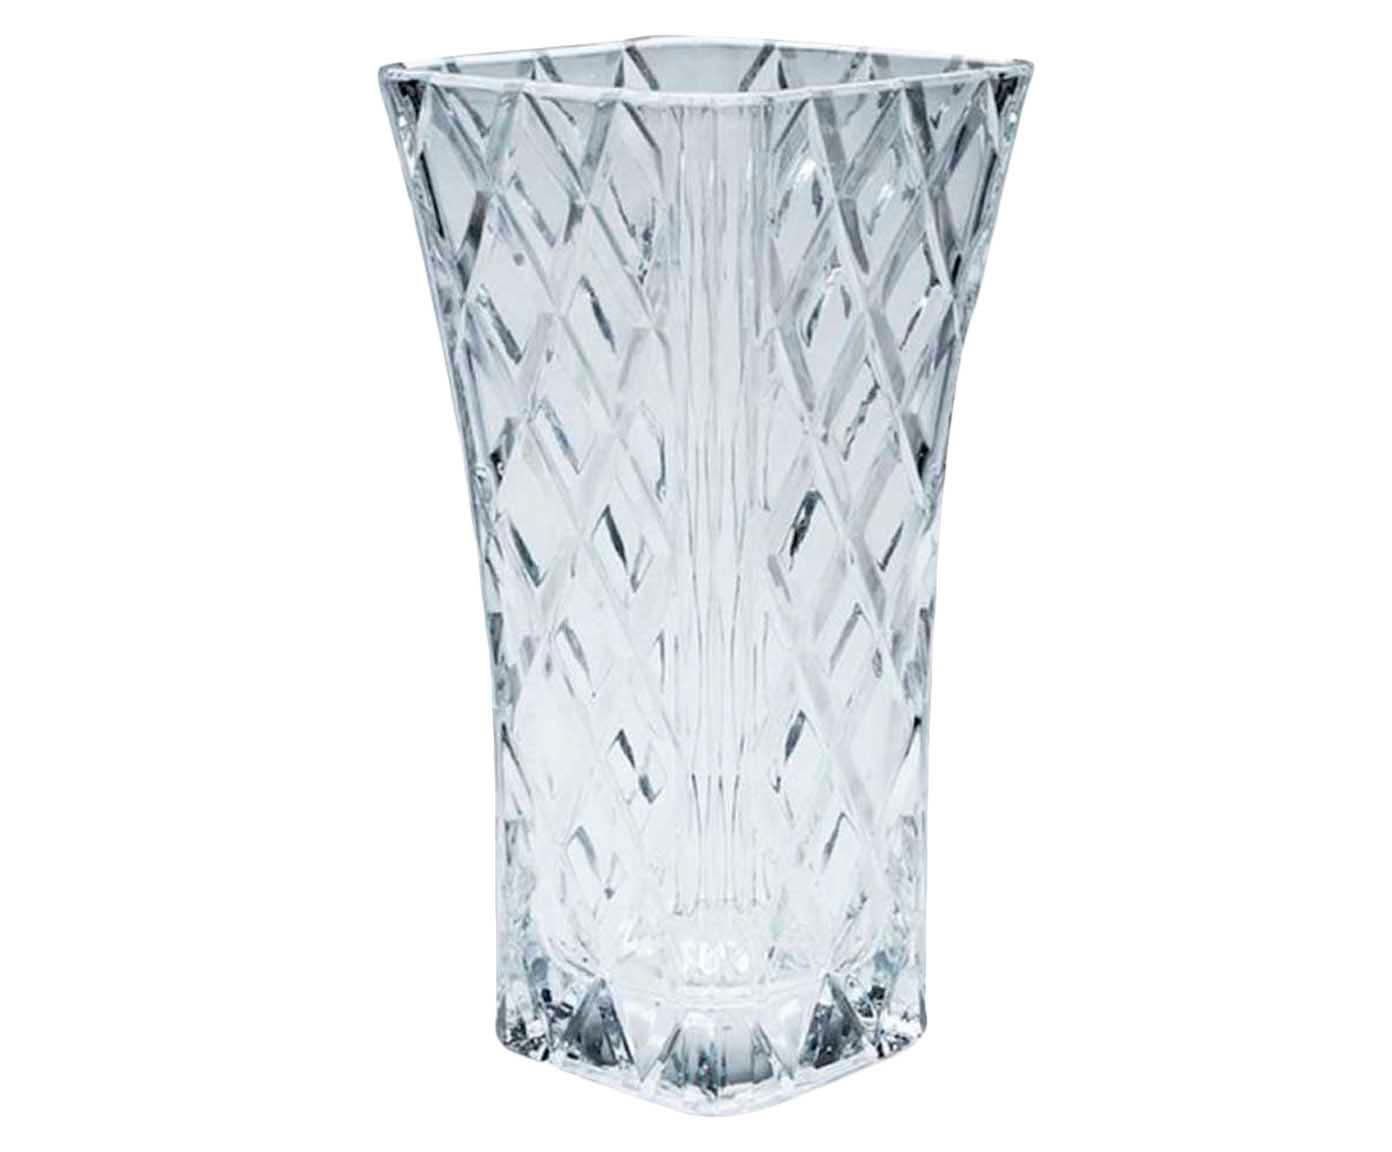 Vaso sparkle wolff - 25 cm | Westwing.com.br